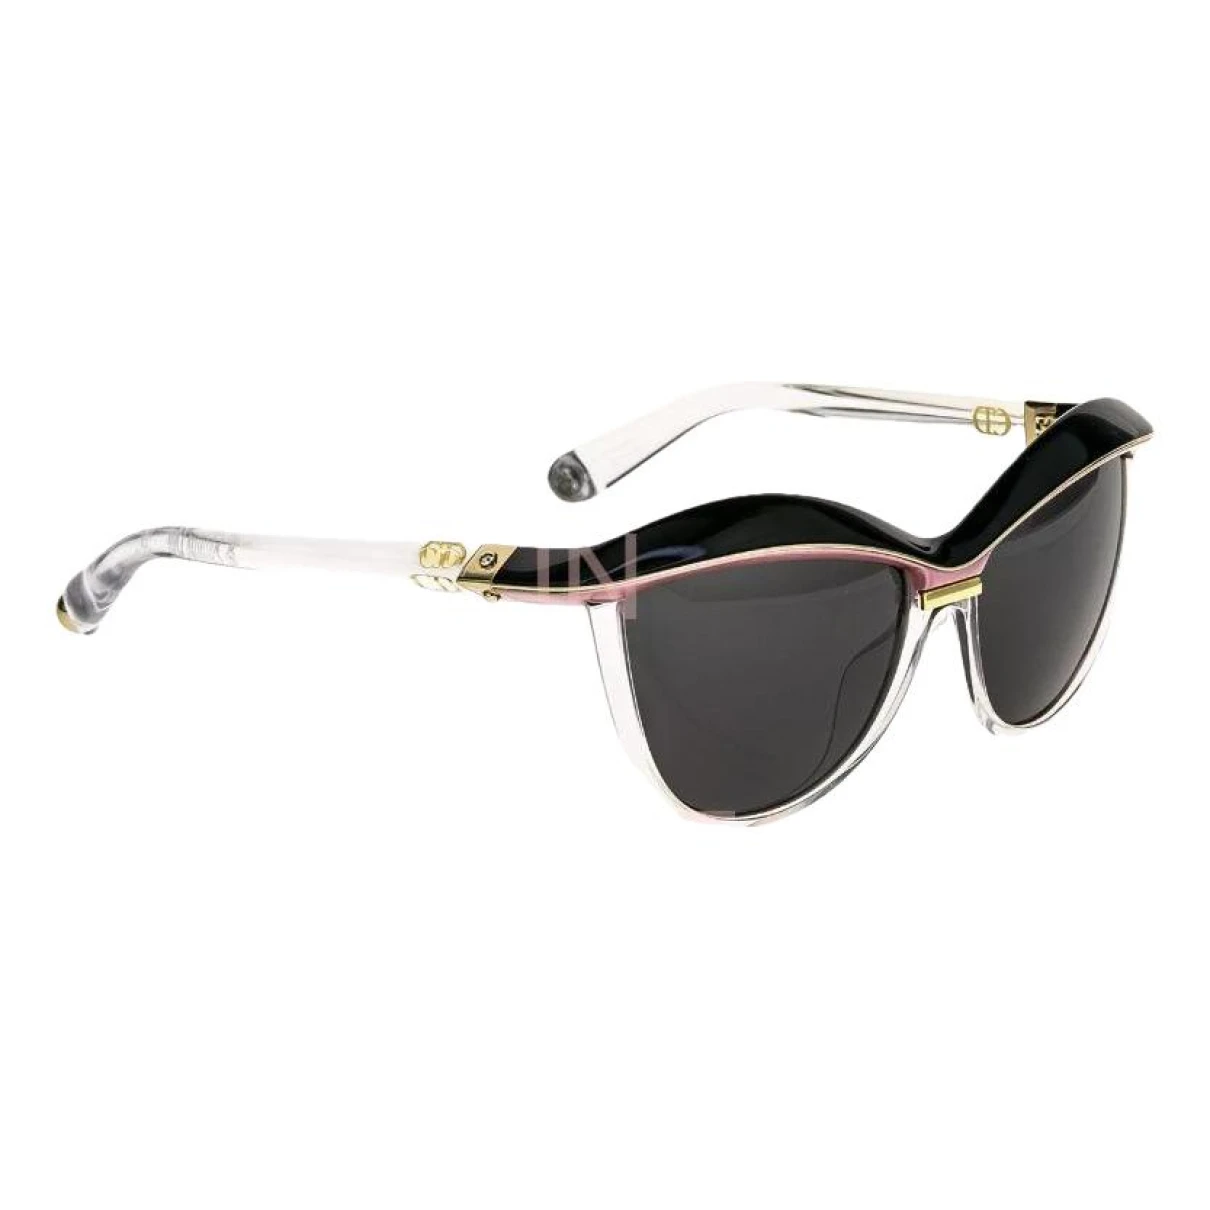 Pre-owned Dior Sunglasses In Black